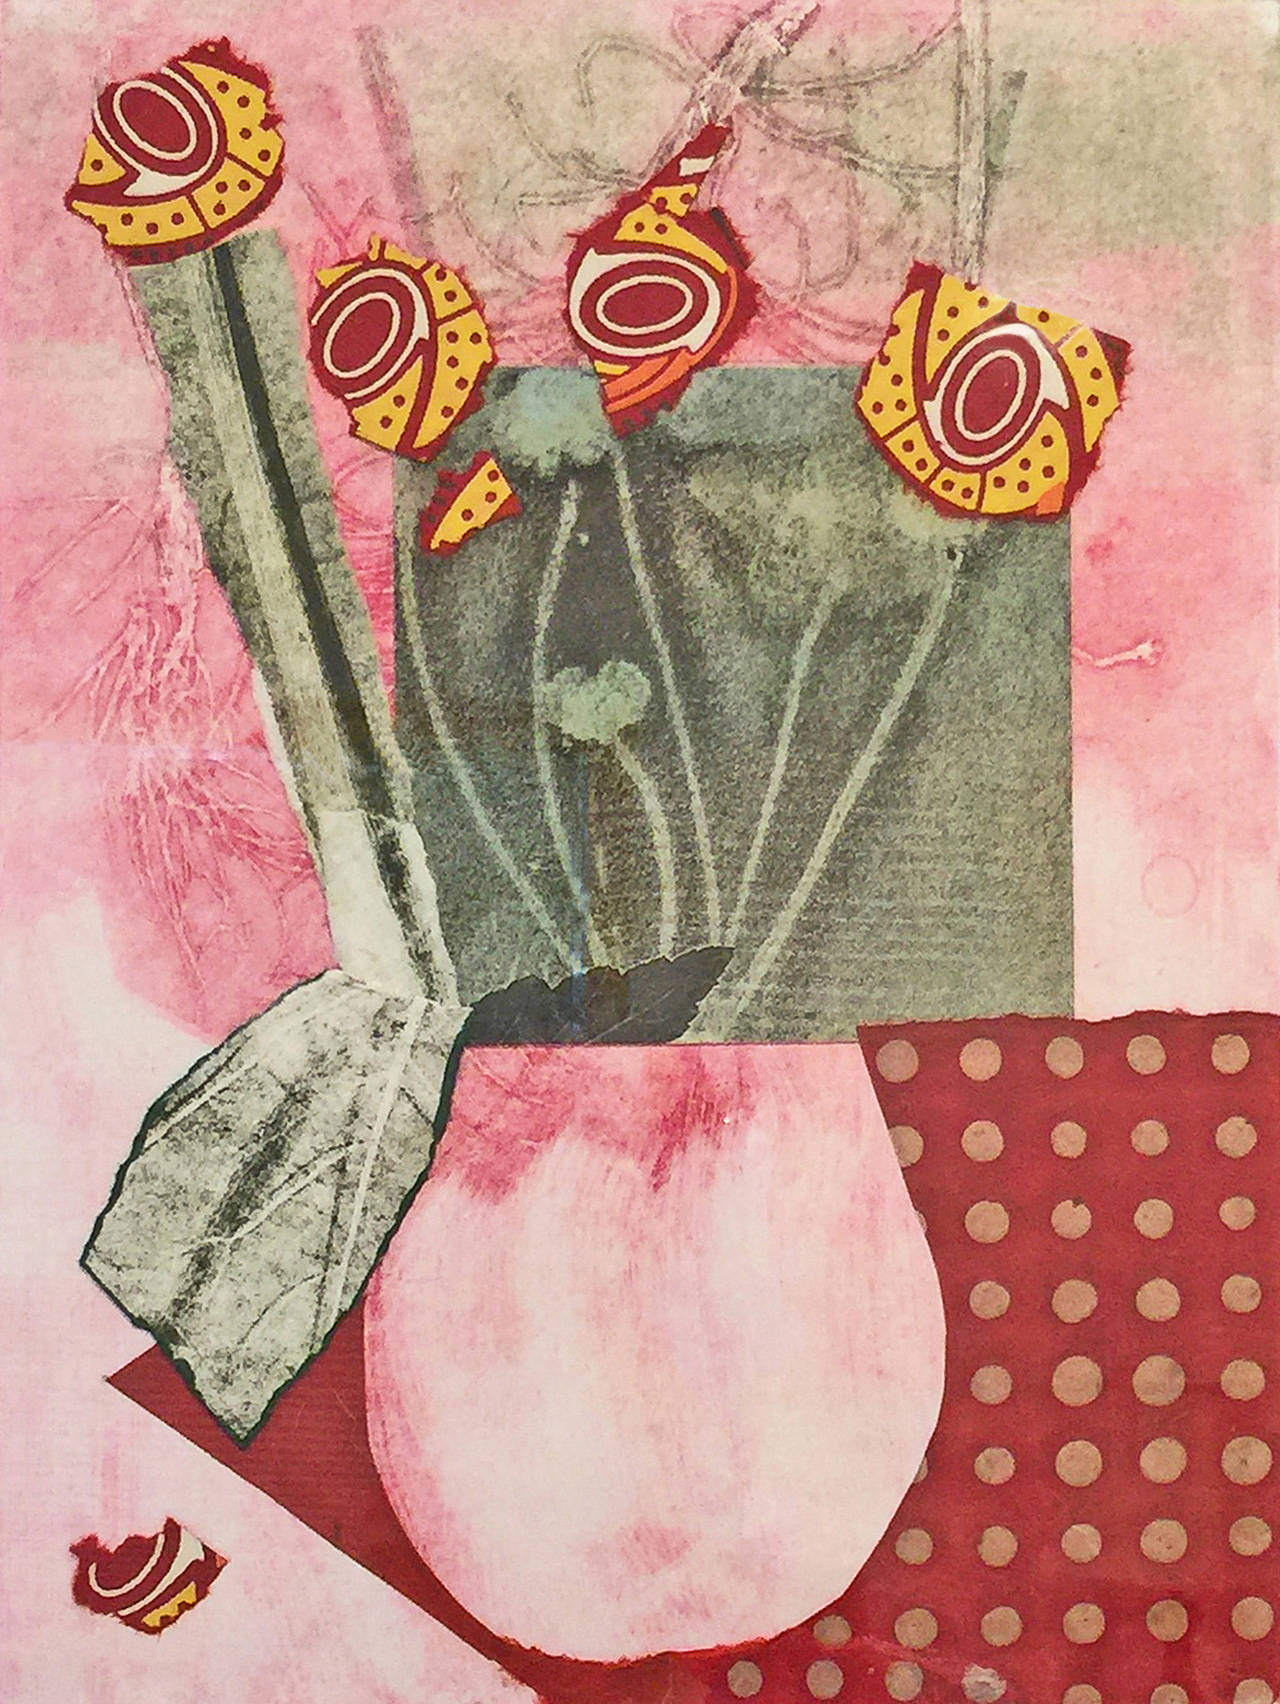 Jan Branham, “Tulips,” monoprint/collage. (Image courtesy of The Island Gallery)